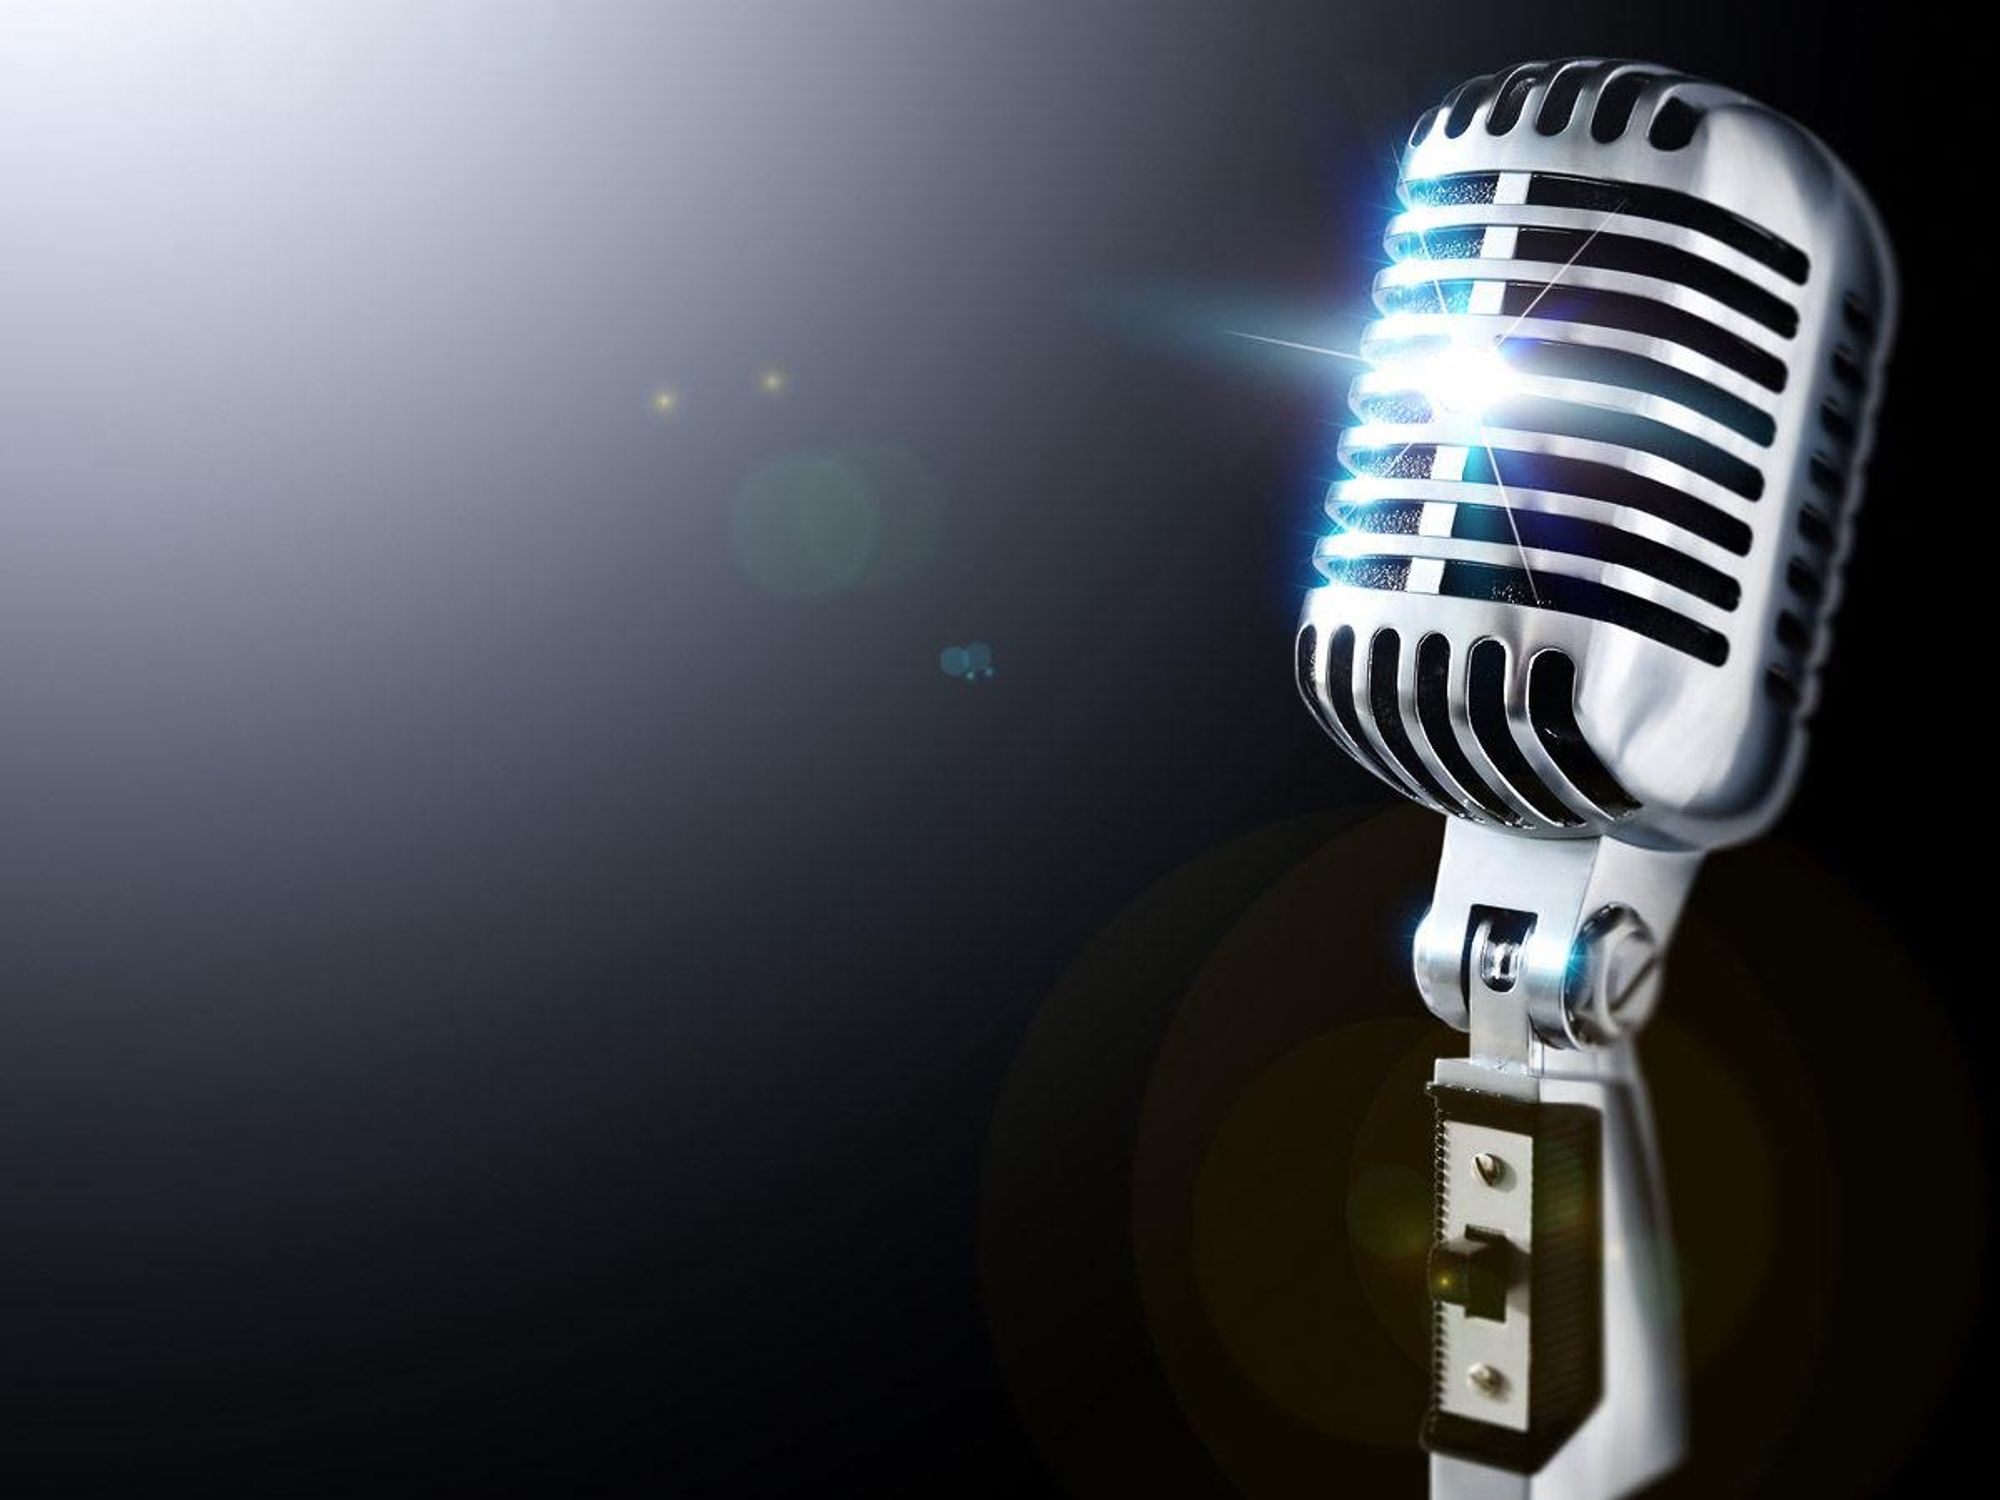 News_microphone_radio station_mic